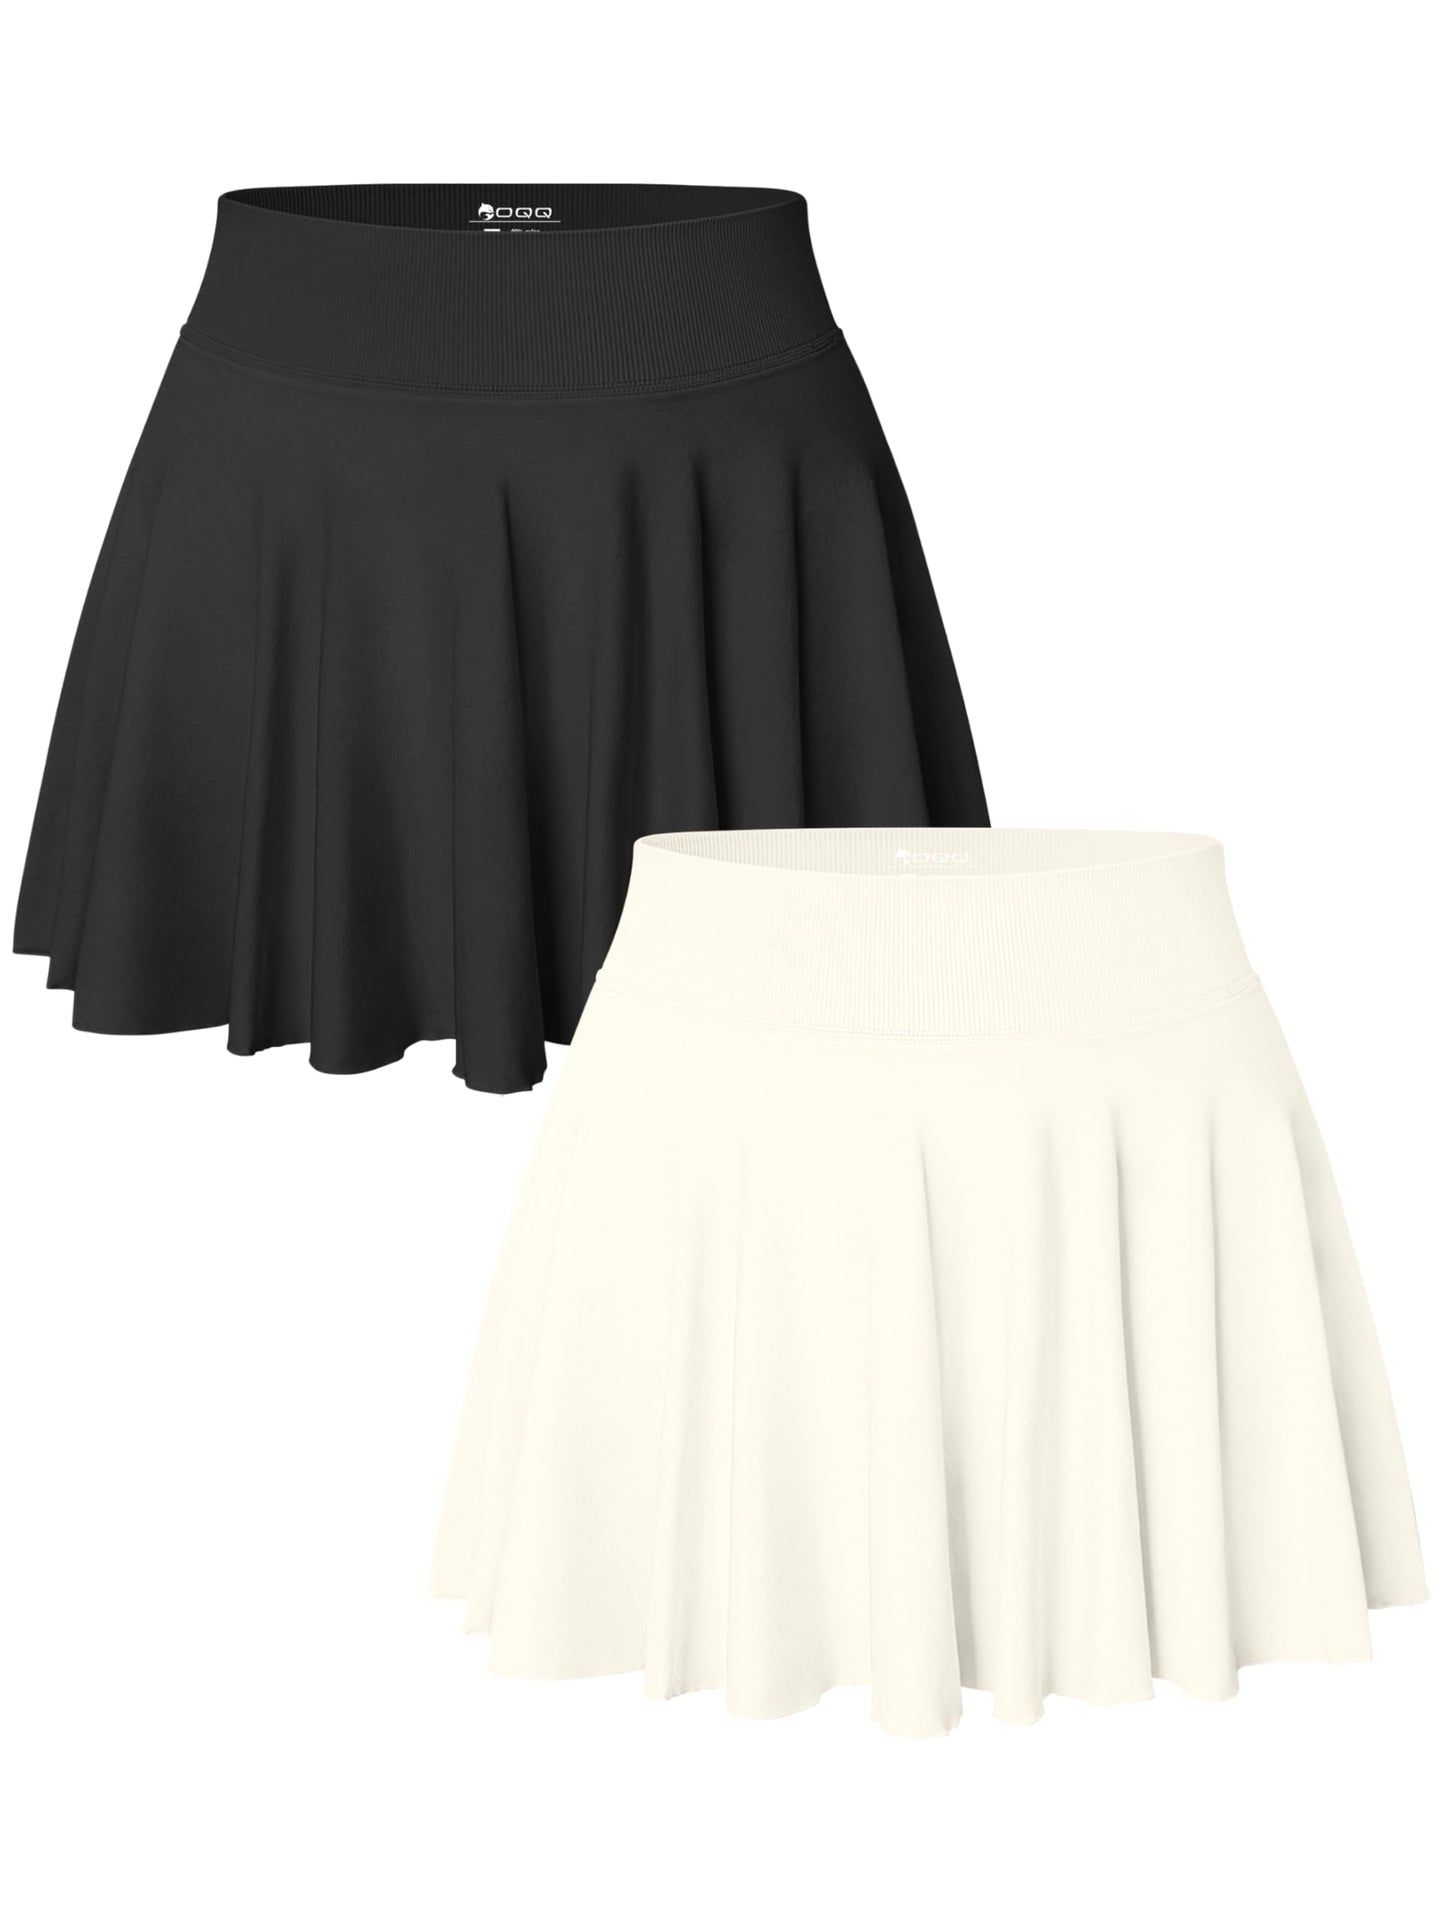 Women 2 Piece Skirts 2 in 1 Flowy Basic Versatile Stretchy Flared Casual Mini Skirts Blakc Beige